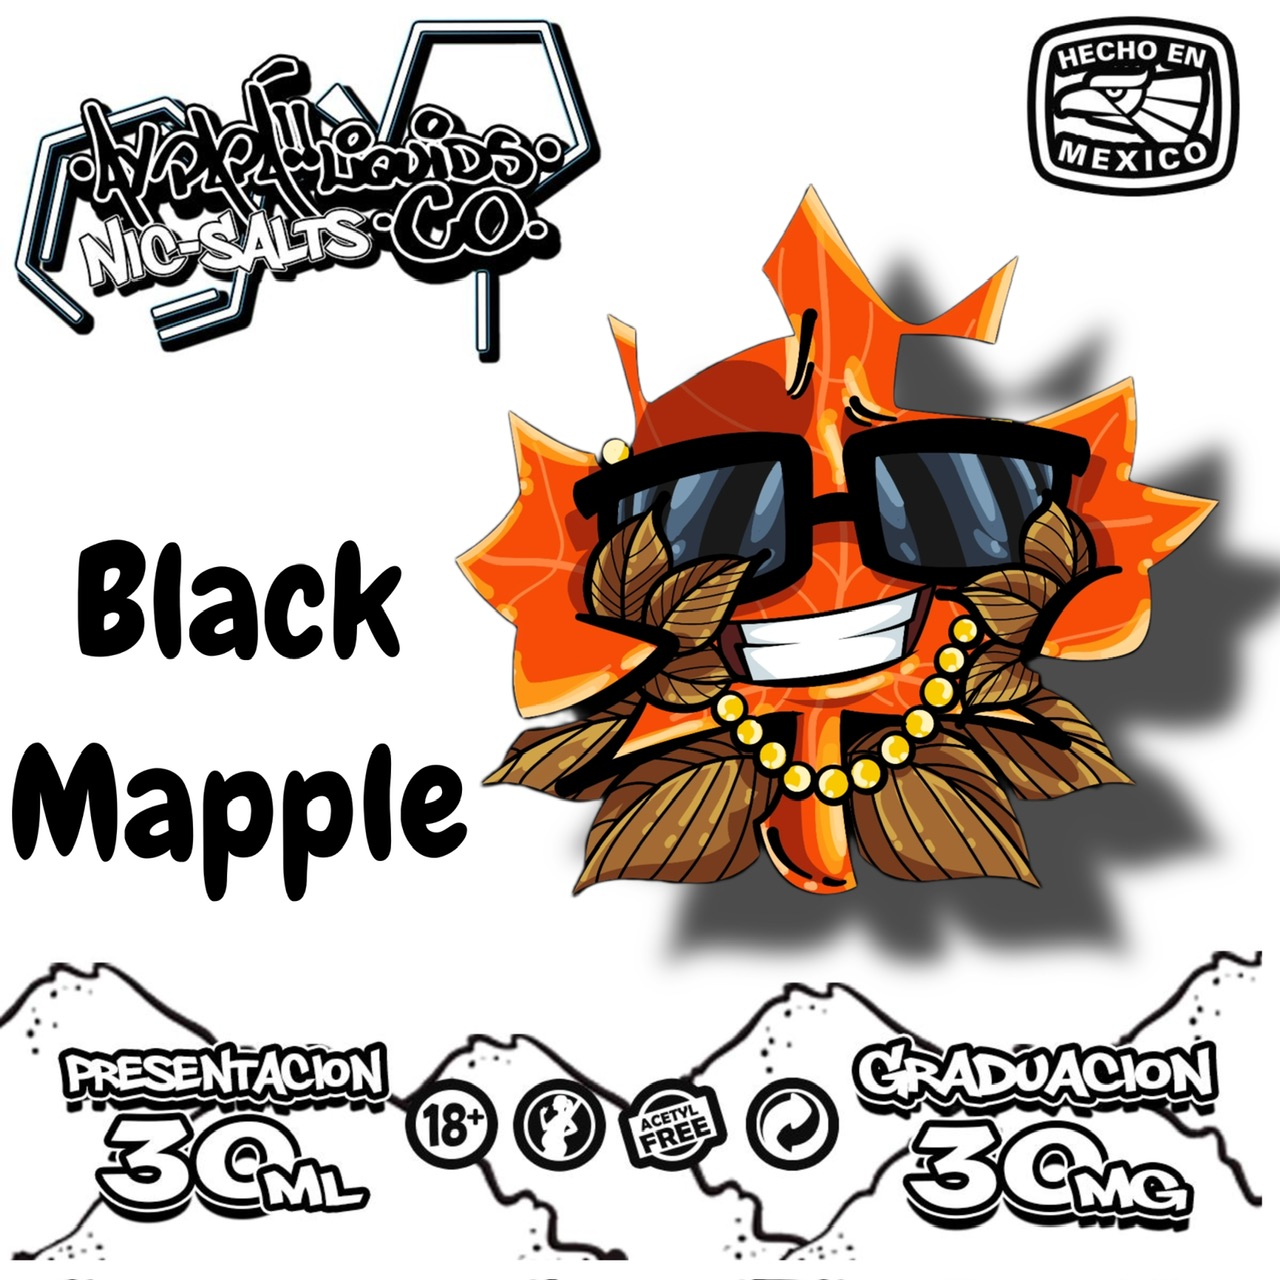 Black Mapple Nicsalt